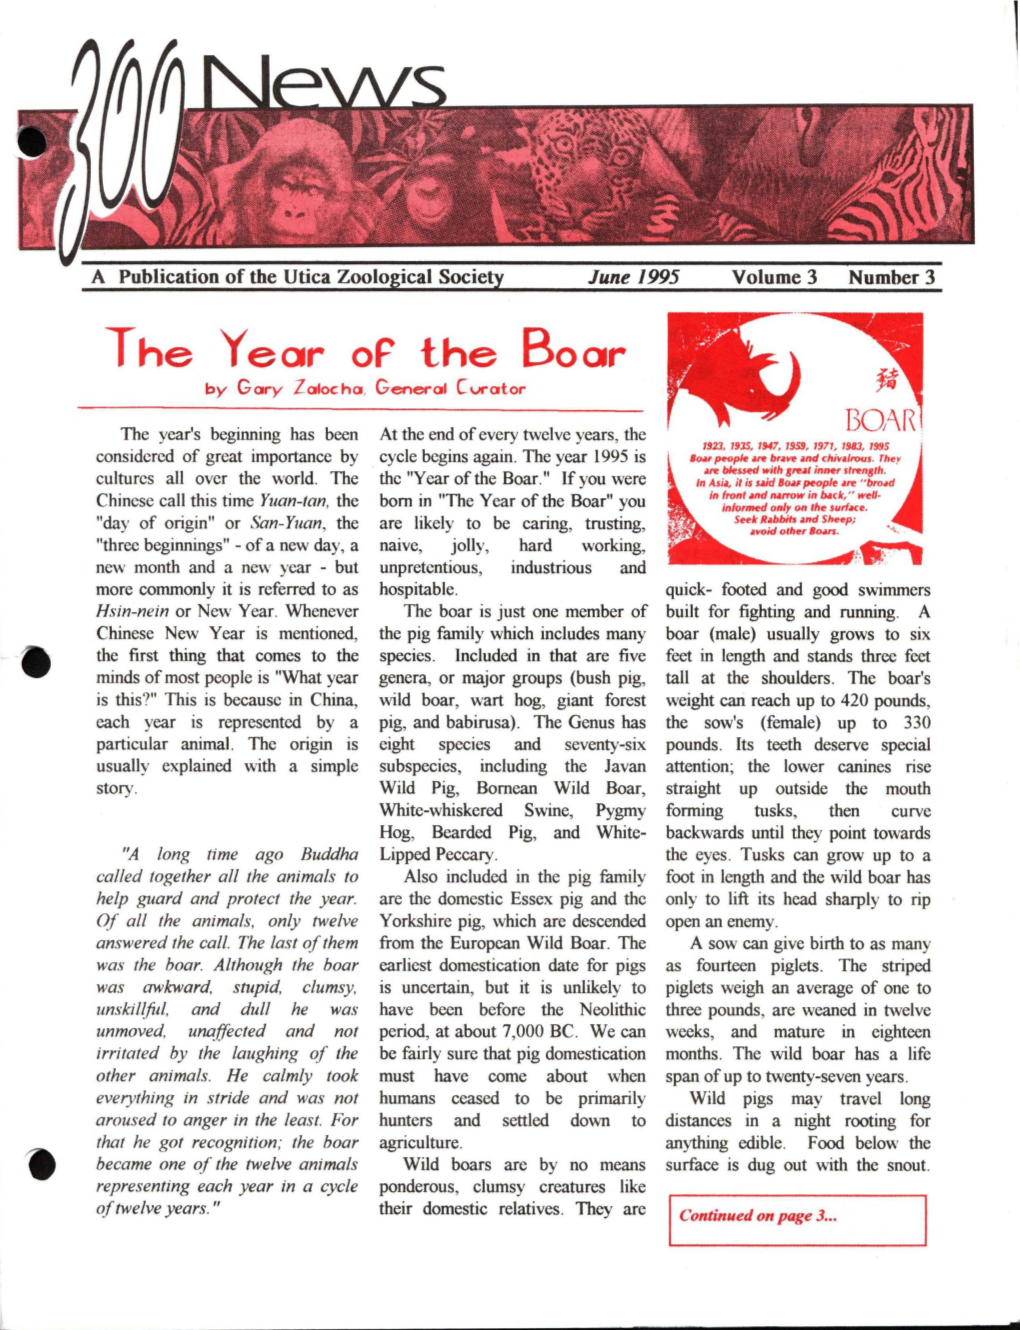 The Year of the Boar by Gary Zalocha, General Cvrator